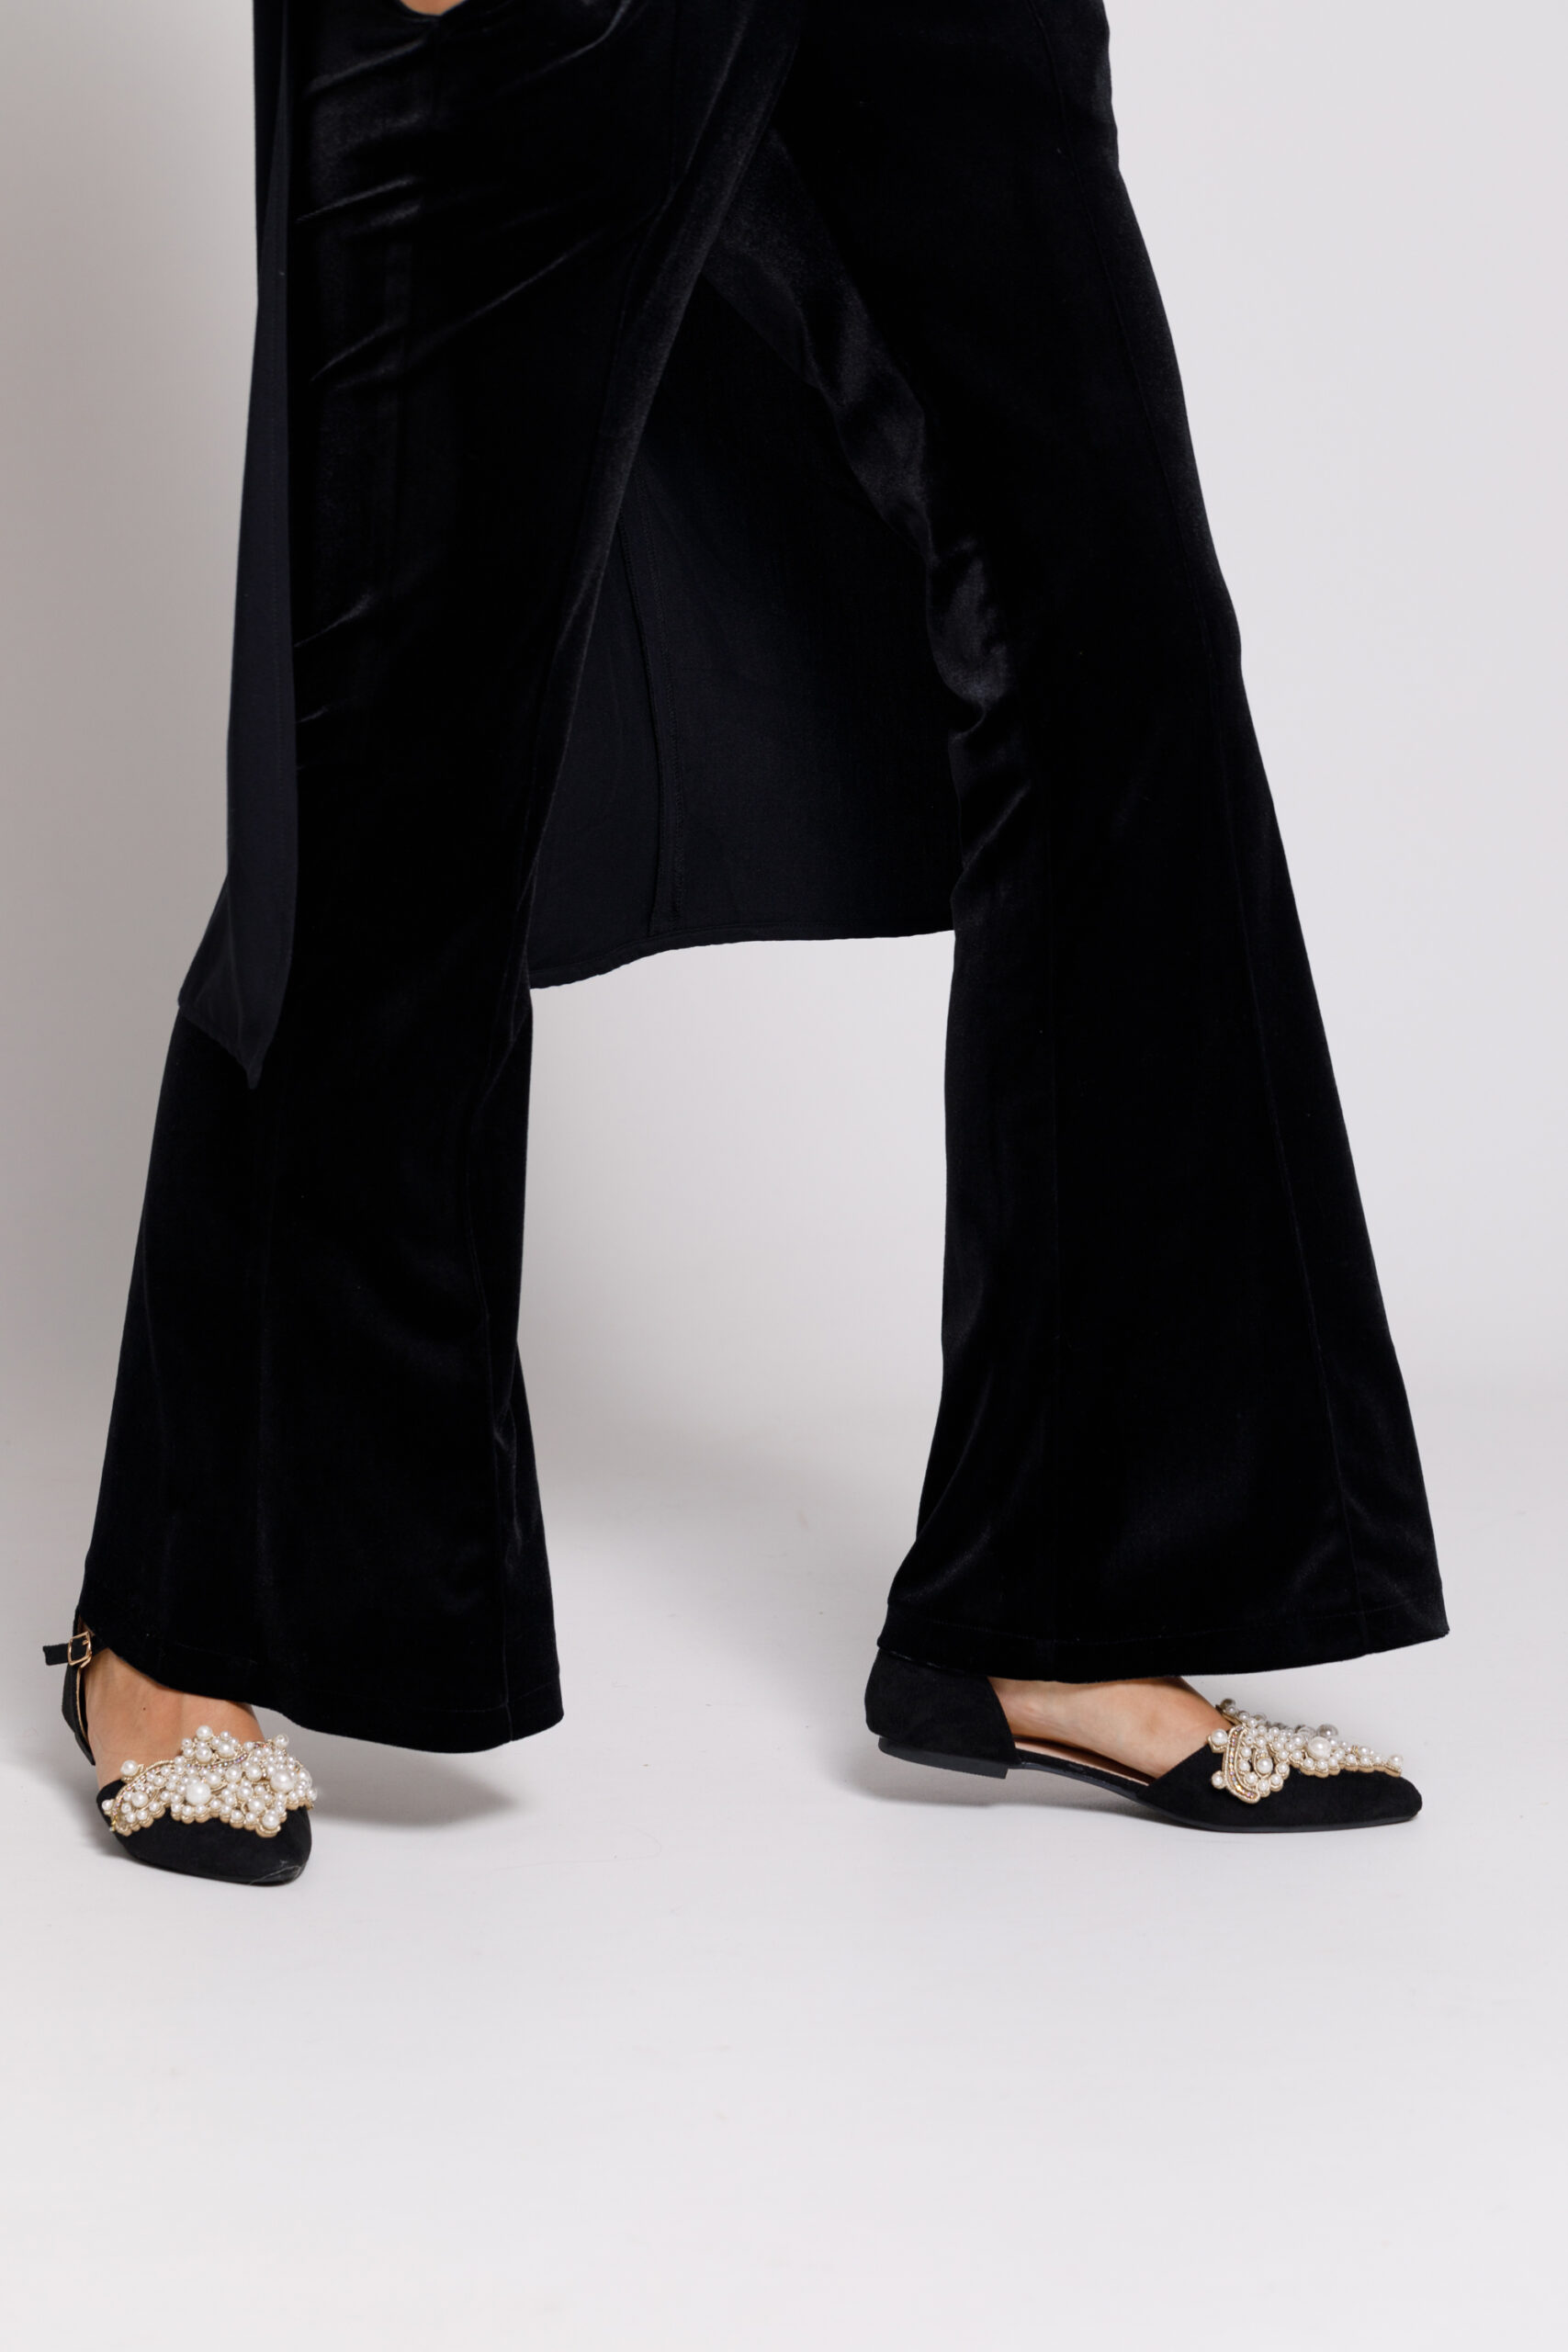 ENNIS pants in black velvet flared. Natural fabrics, original design, handmade embroidery